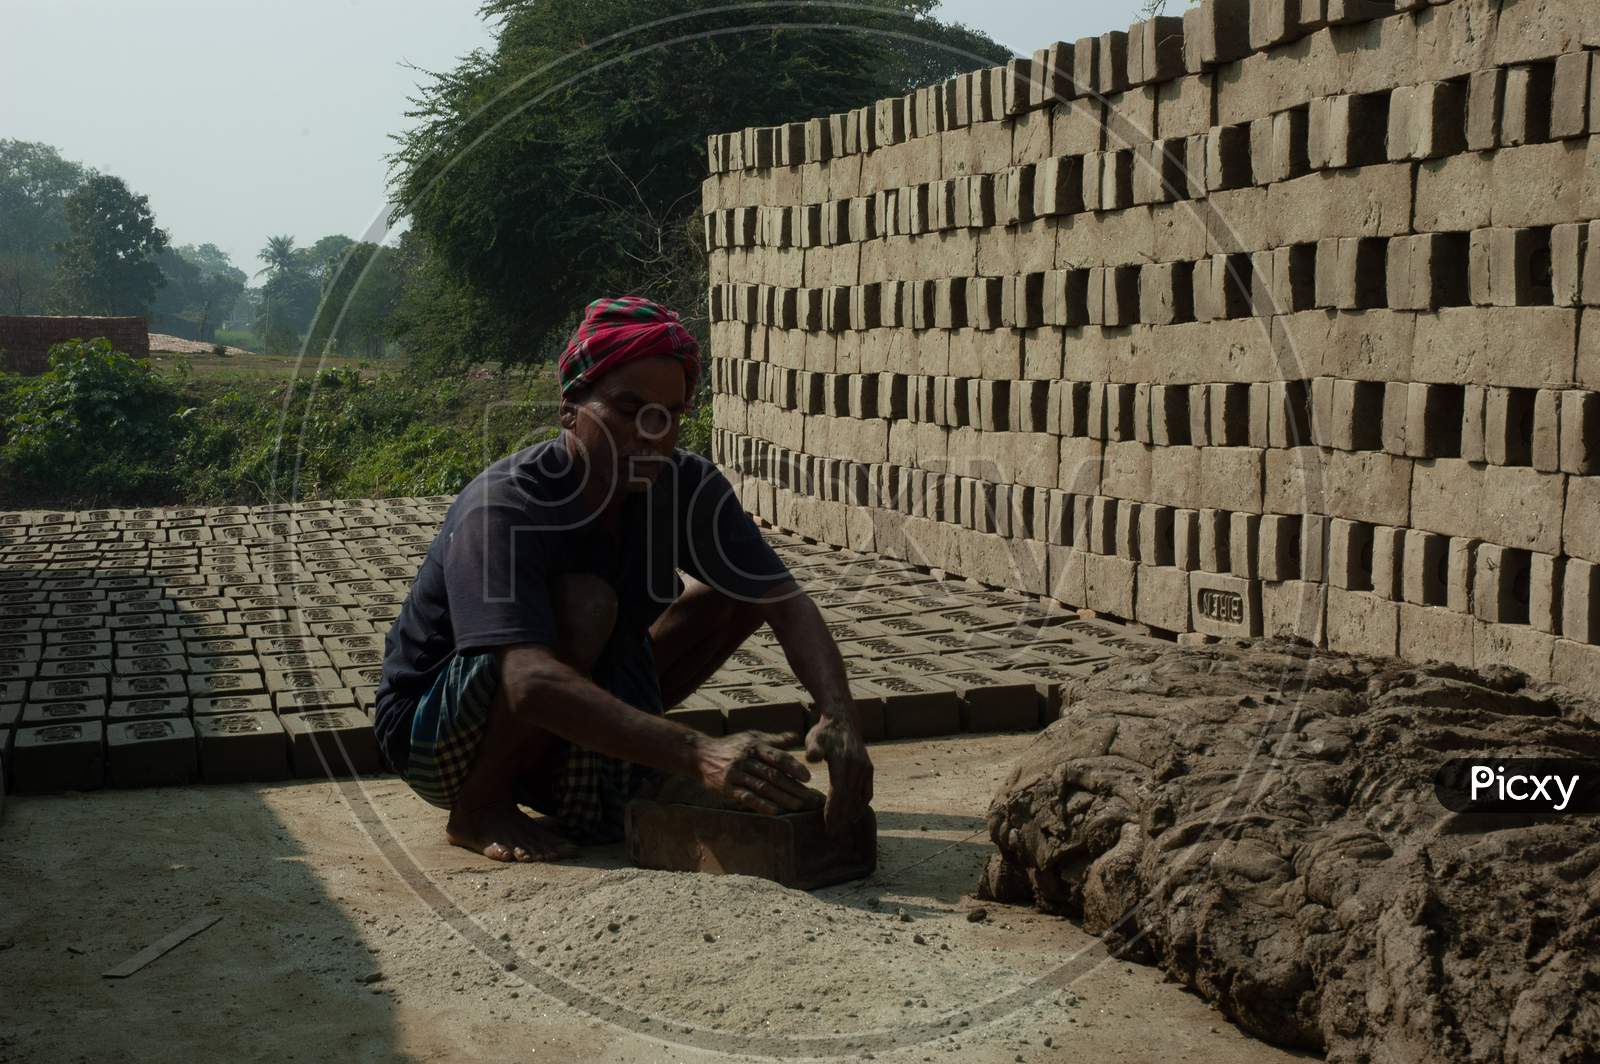 A Man Making   Clay Bricks At a Klin